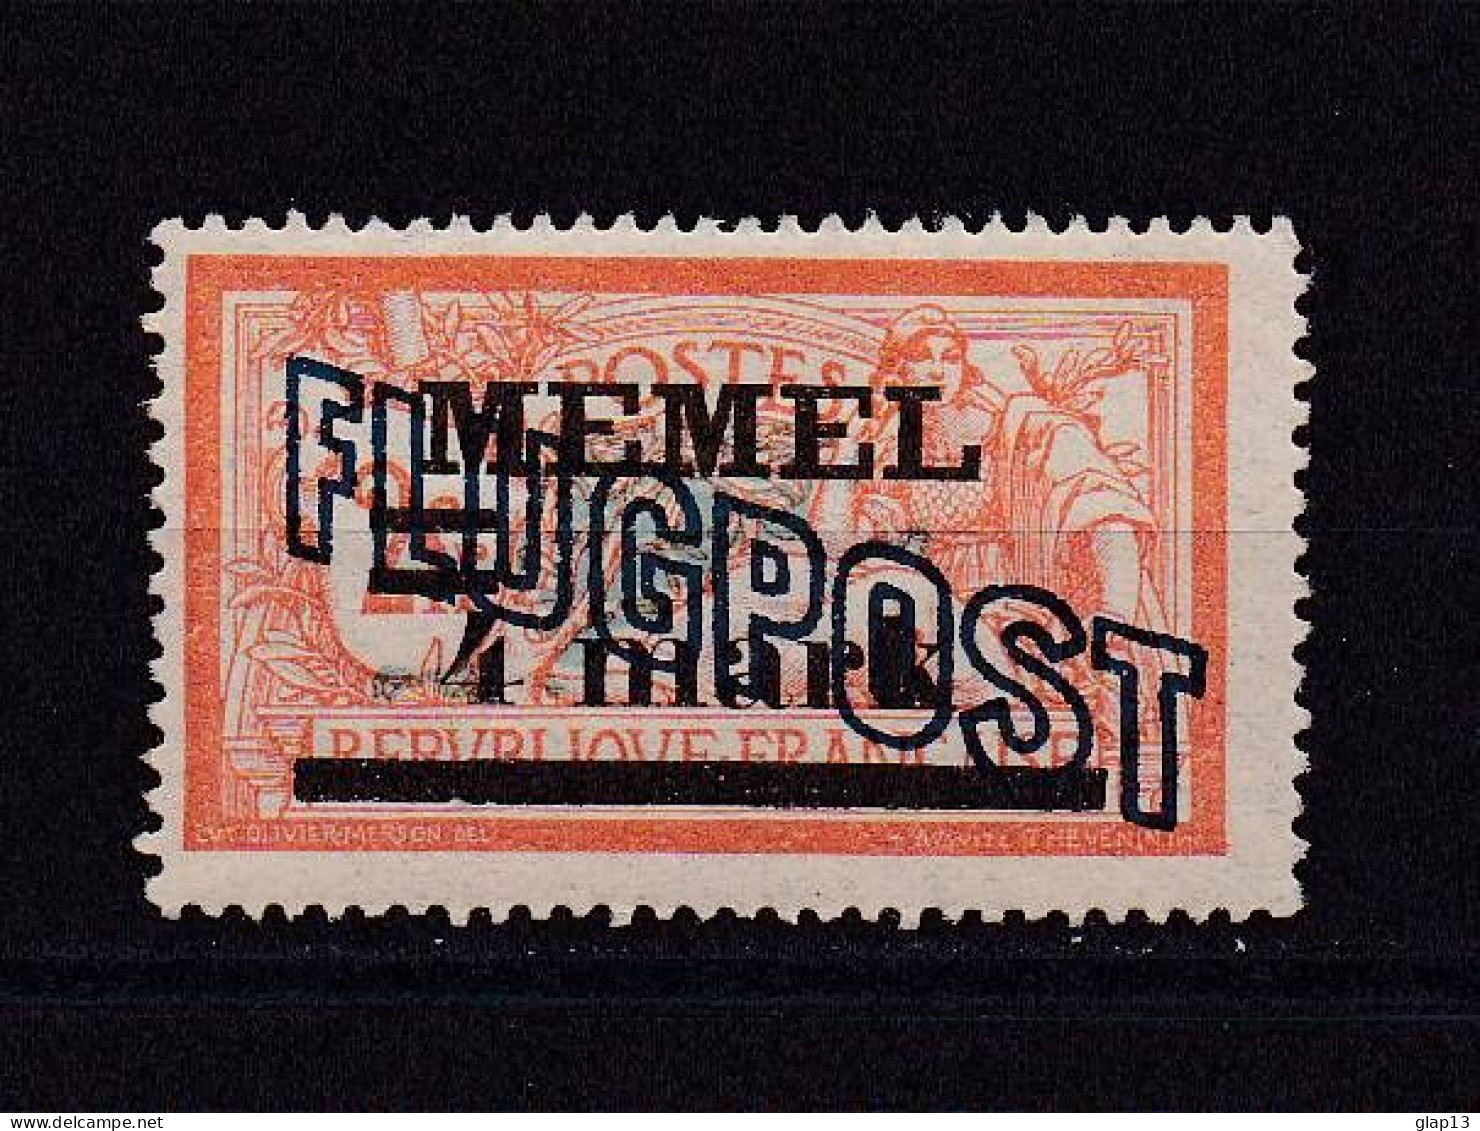 MEMEL 1921 PA N°7 NEUF AVEC CHARNIERE - Unused Stamps